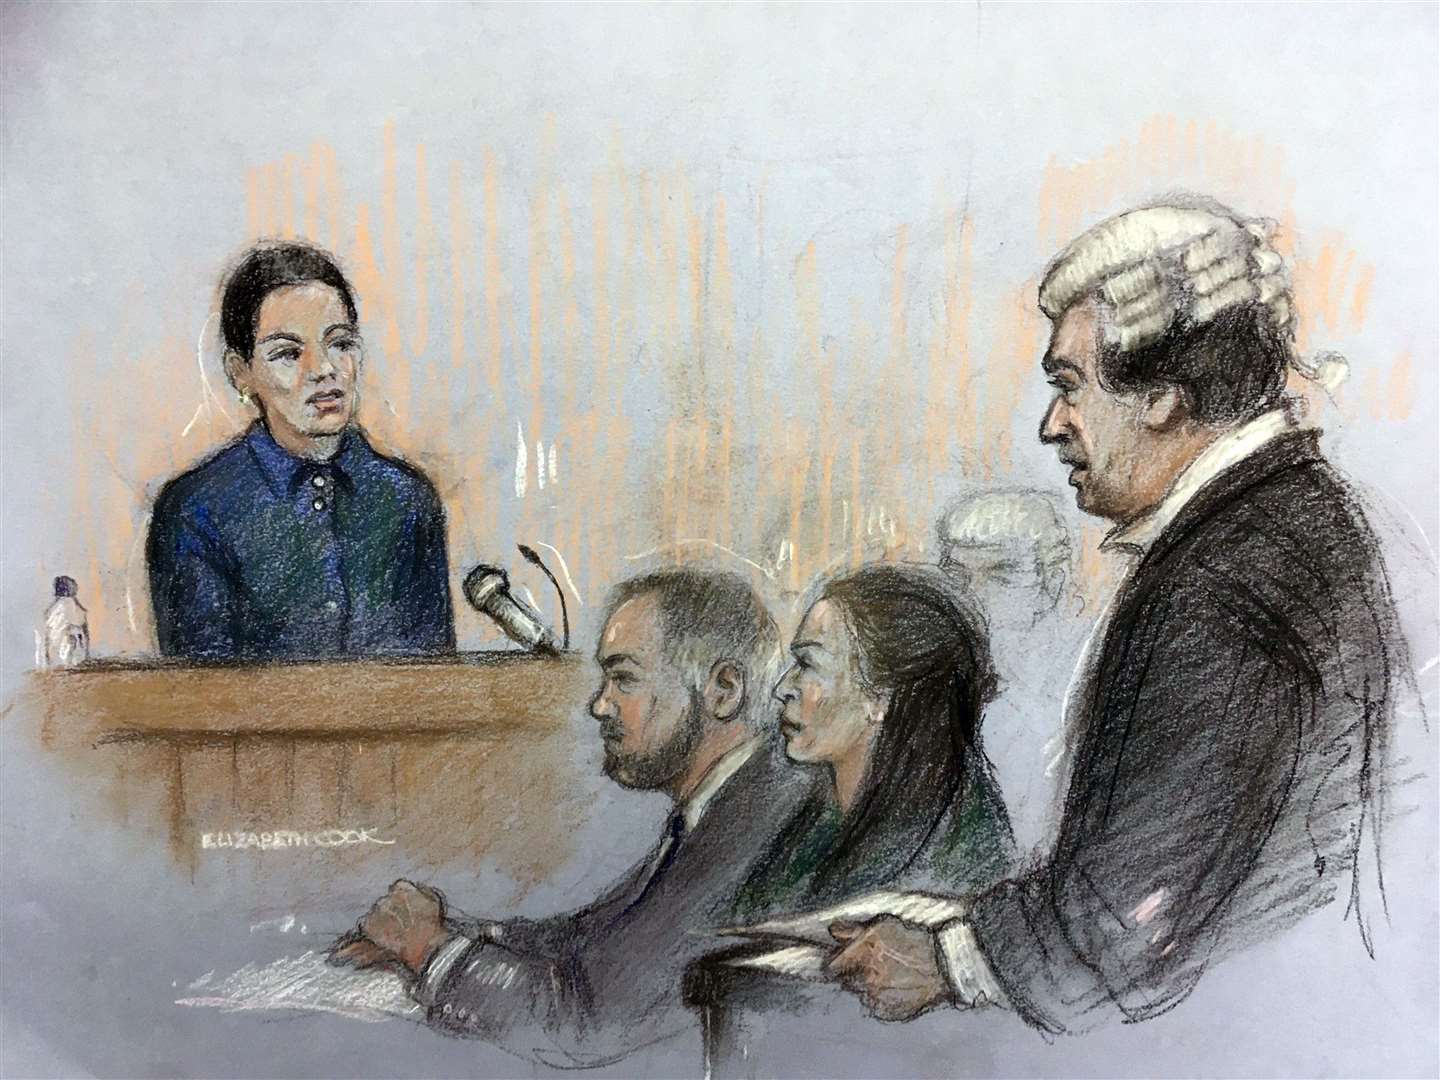 Court artist sketch by Elizabeth Cook of Coleen Rooney’s barrister David Sherborne (right) questioning Rebekah Vardy (Elizabeth Cook/PA)